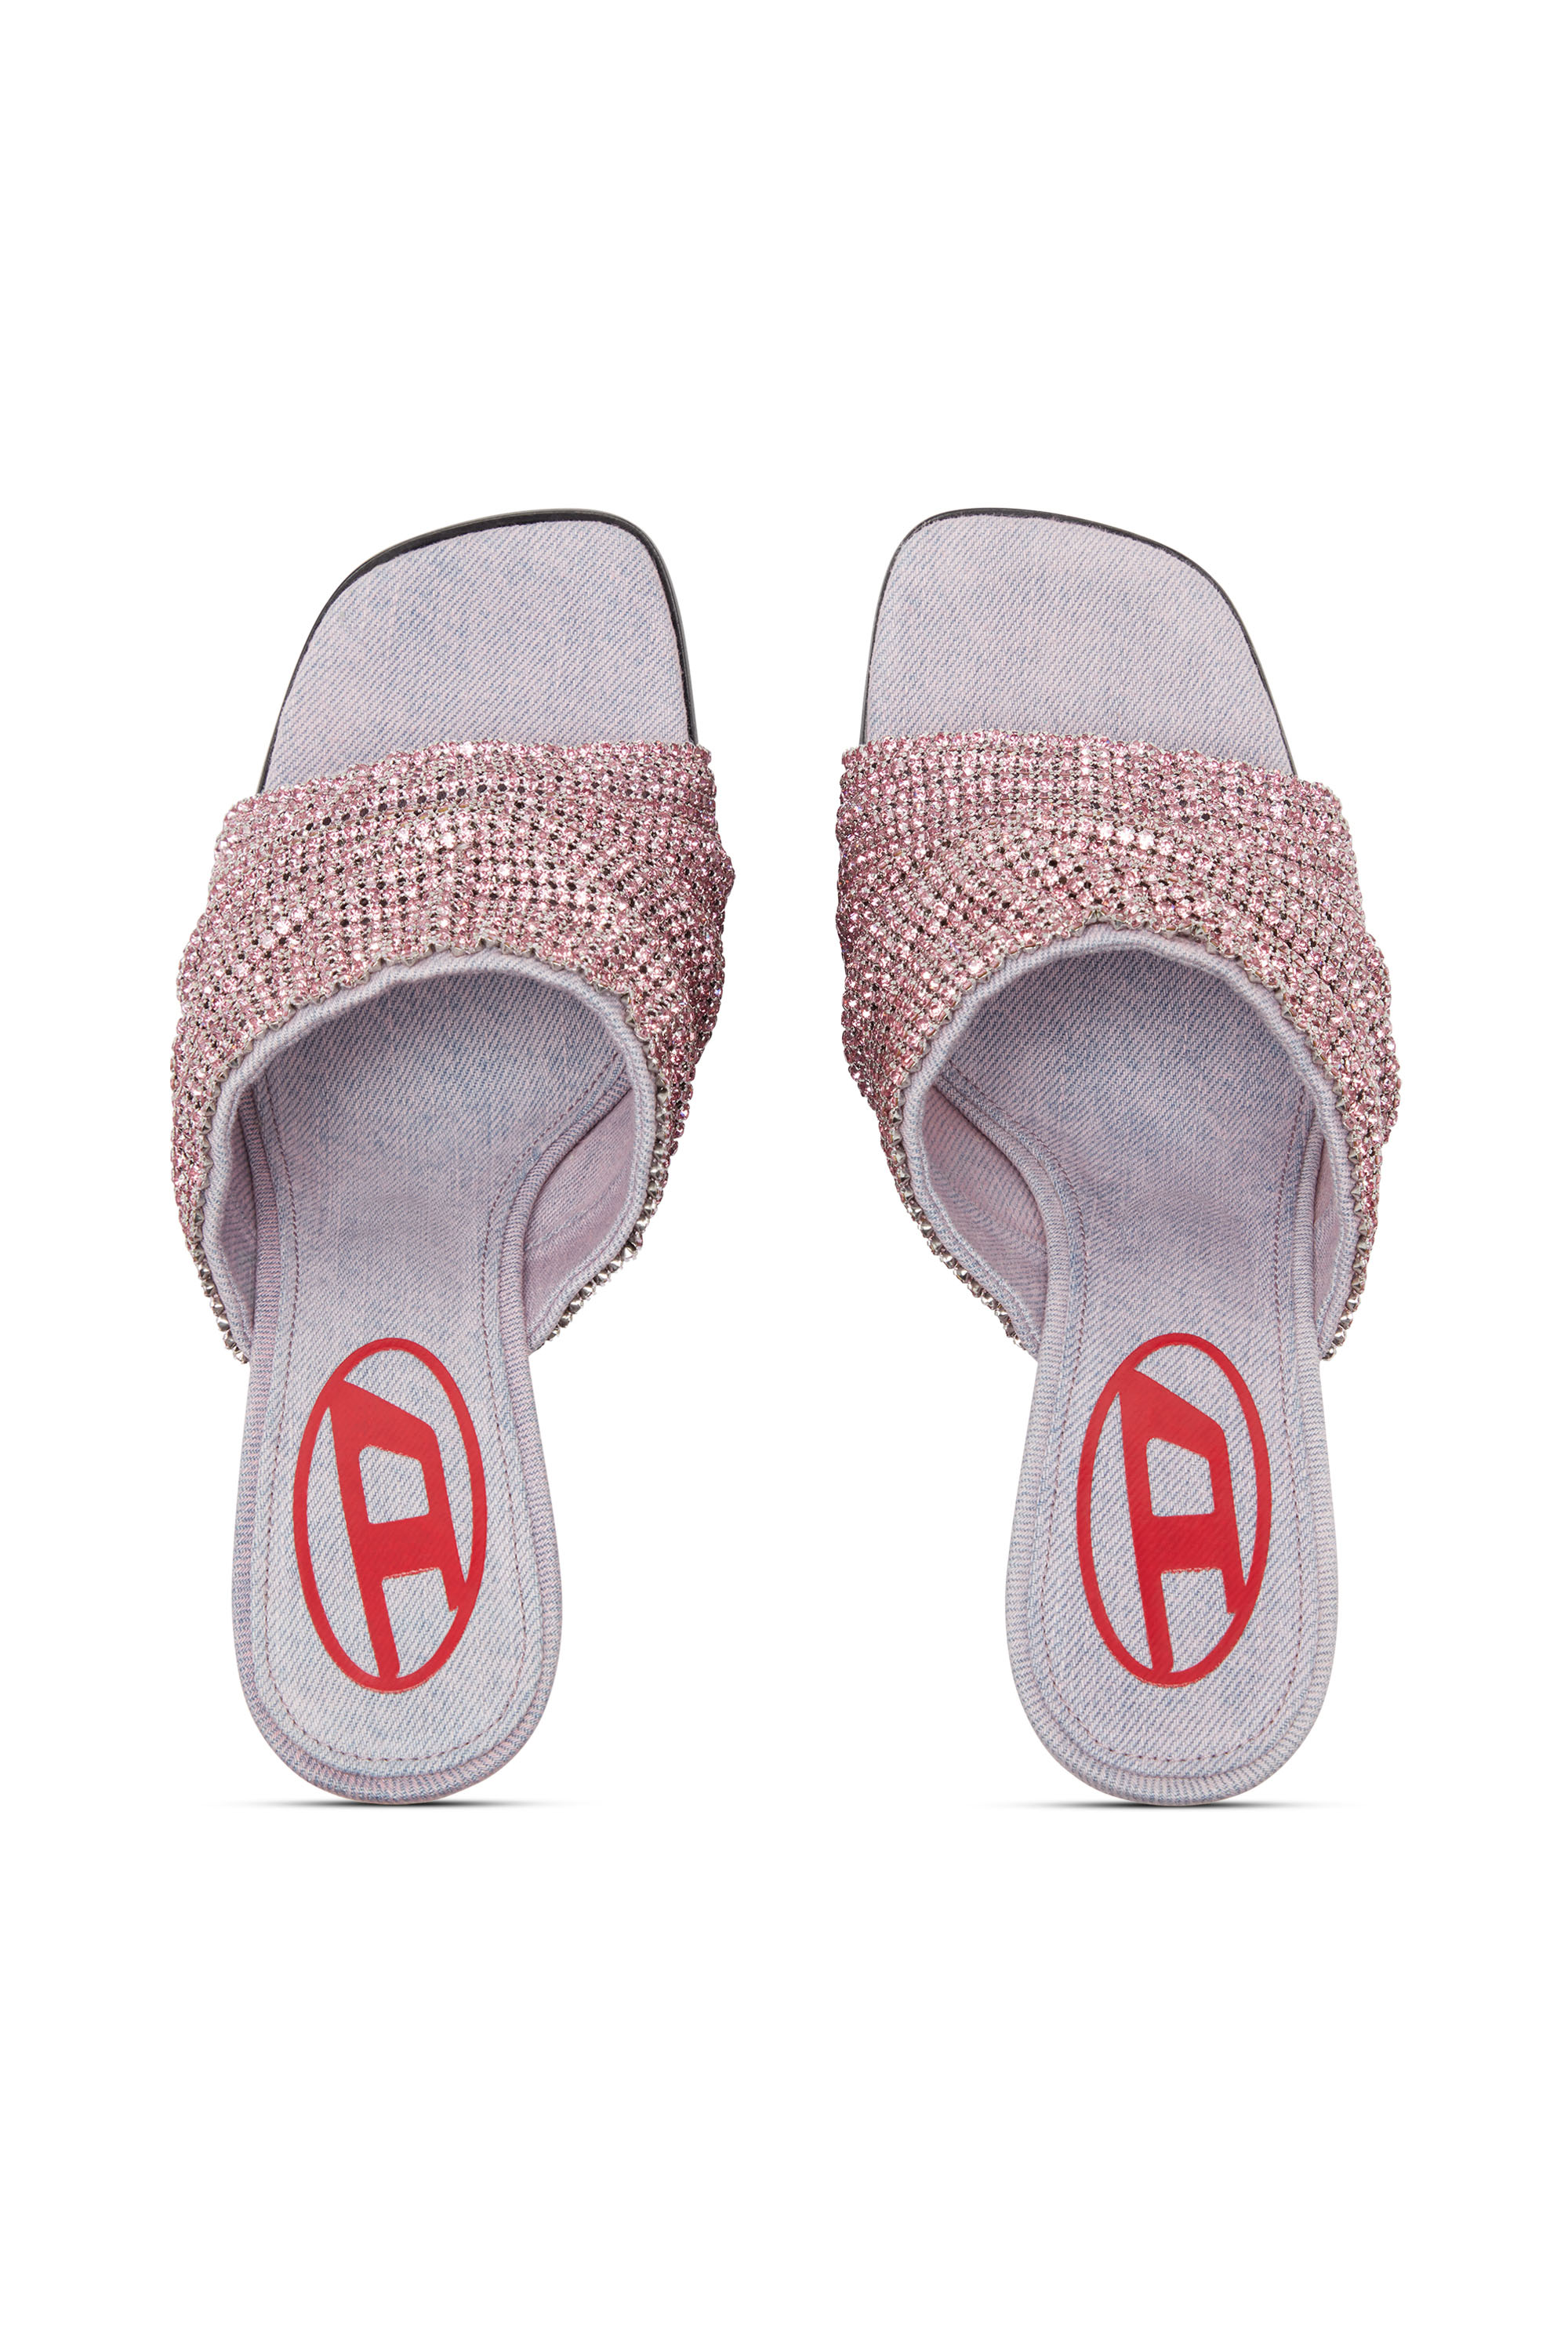 Diesel - D-SYDNEY SDL S, Woman D-Sydney Sdl S Sandals - Mule sandals with rhinestone band in Pink - Image 6